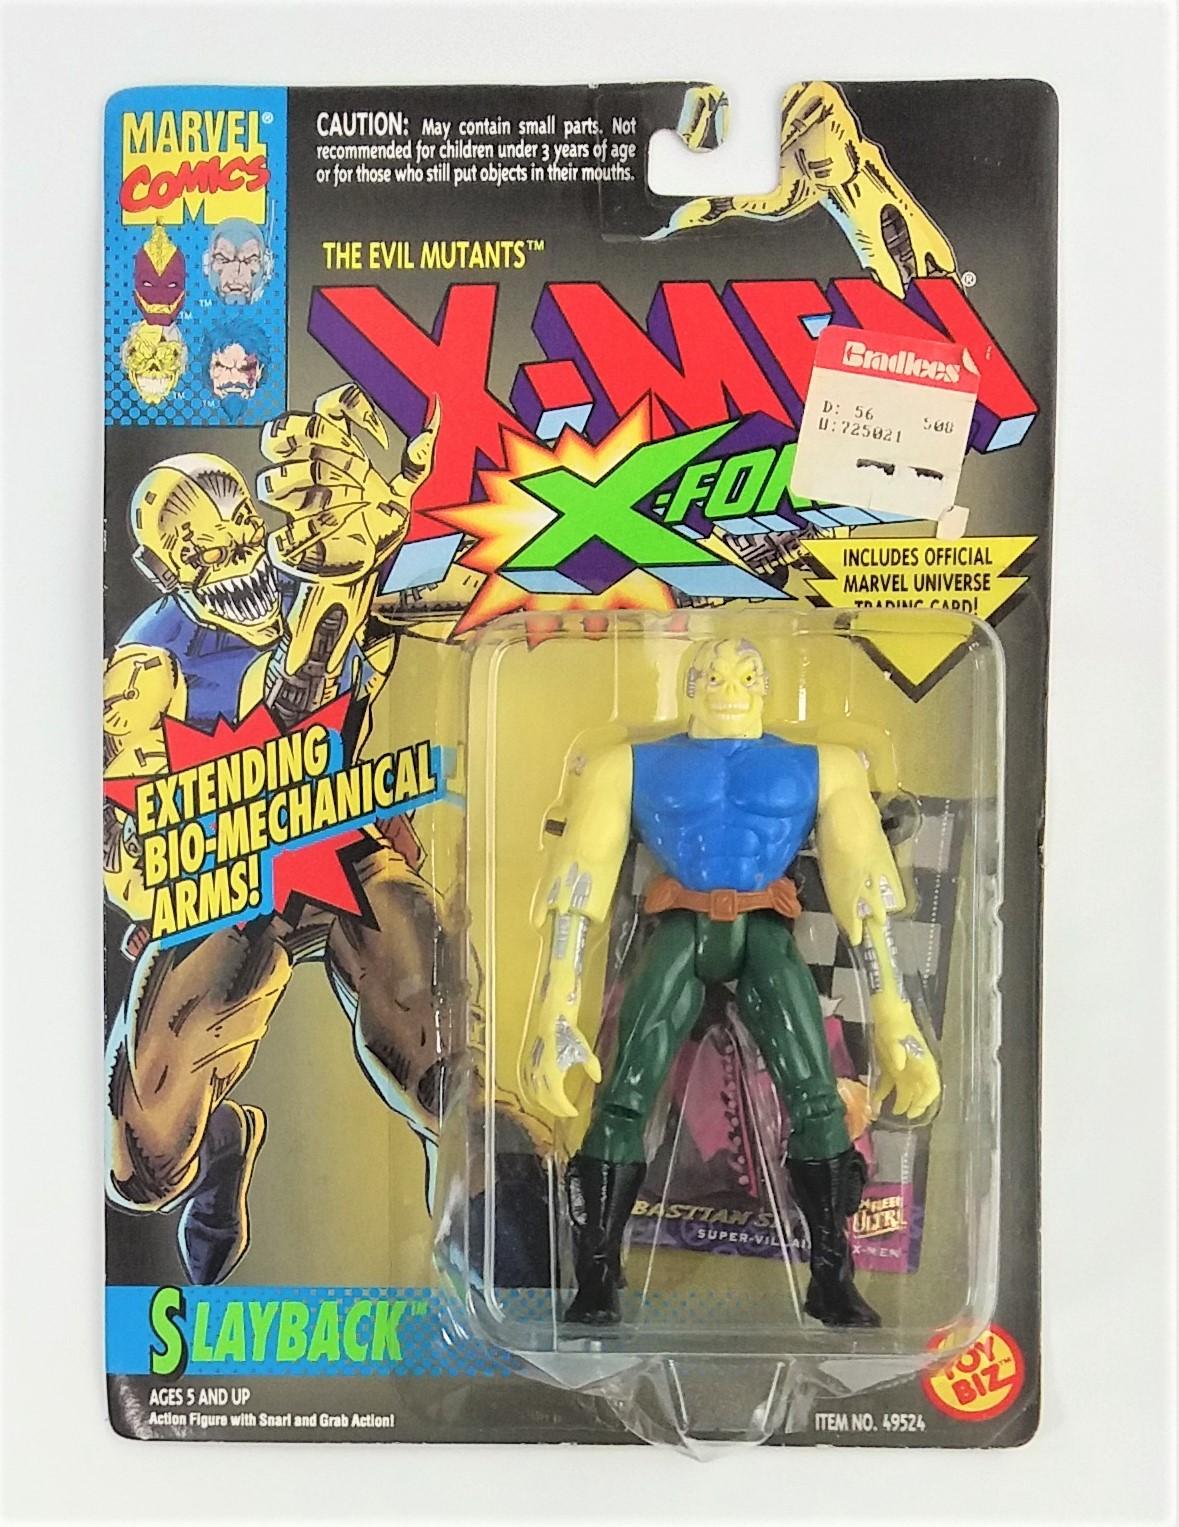 Marvel X-Men Slayback Vintage X-Force Toy Biz Action Figure Toy